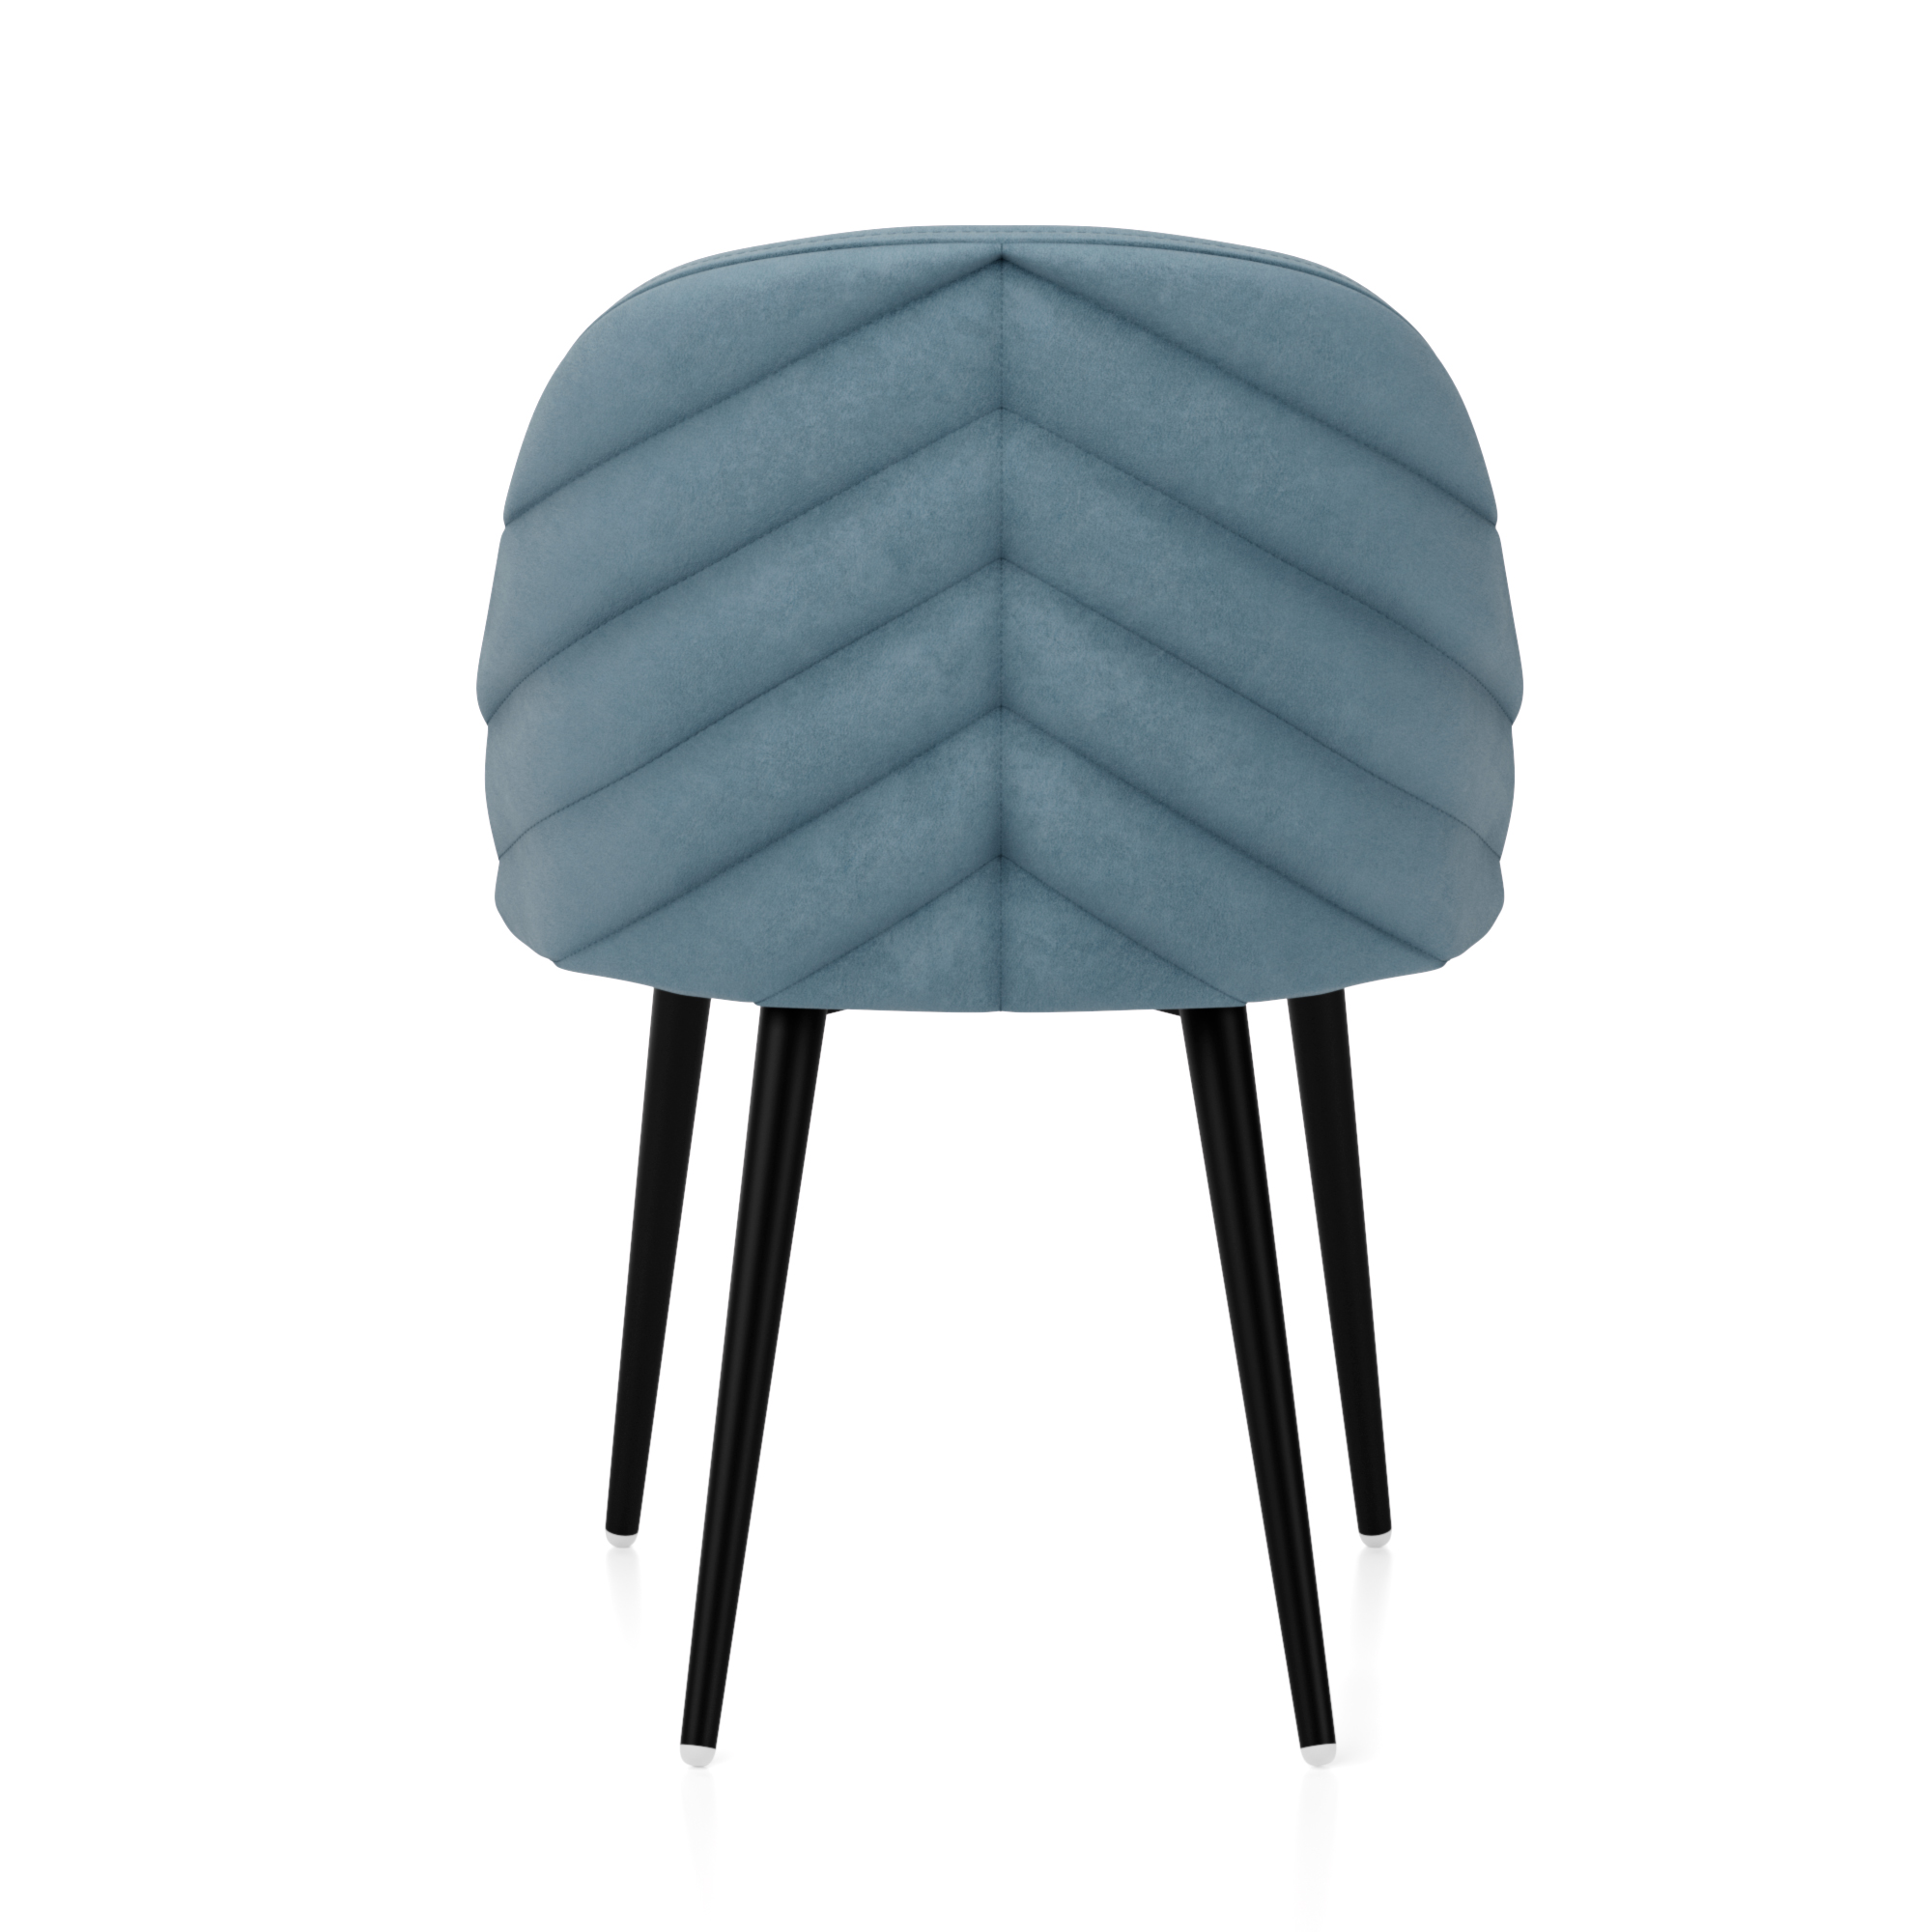 Кресло Лиана велюр металлокаркас (каркас черный тк. коллекции Happy голубая 792)